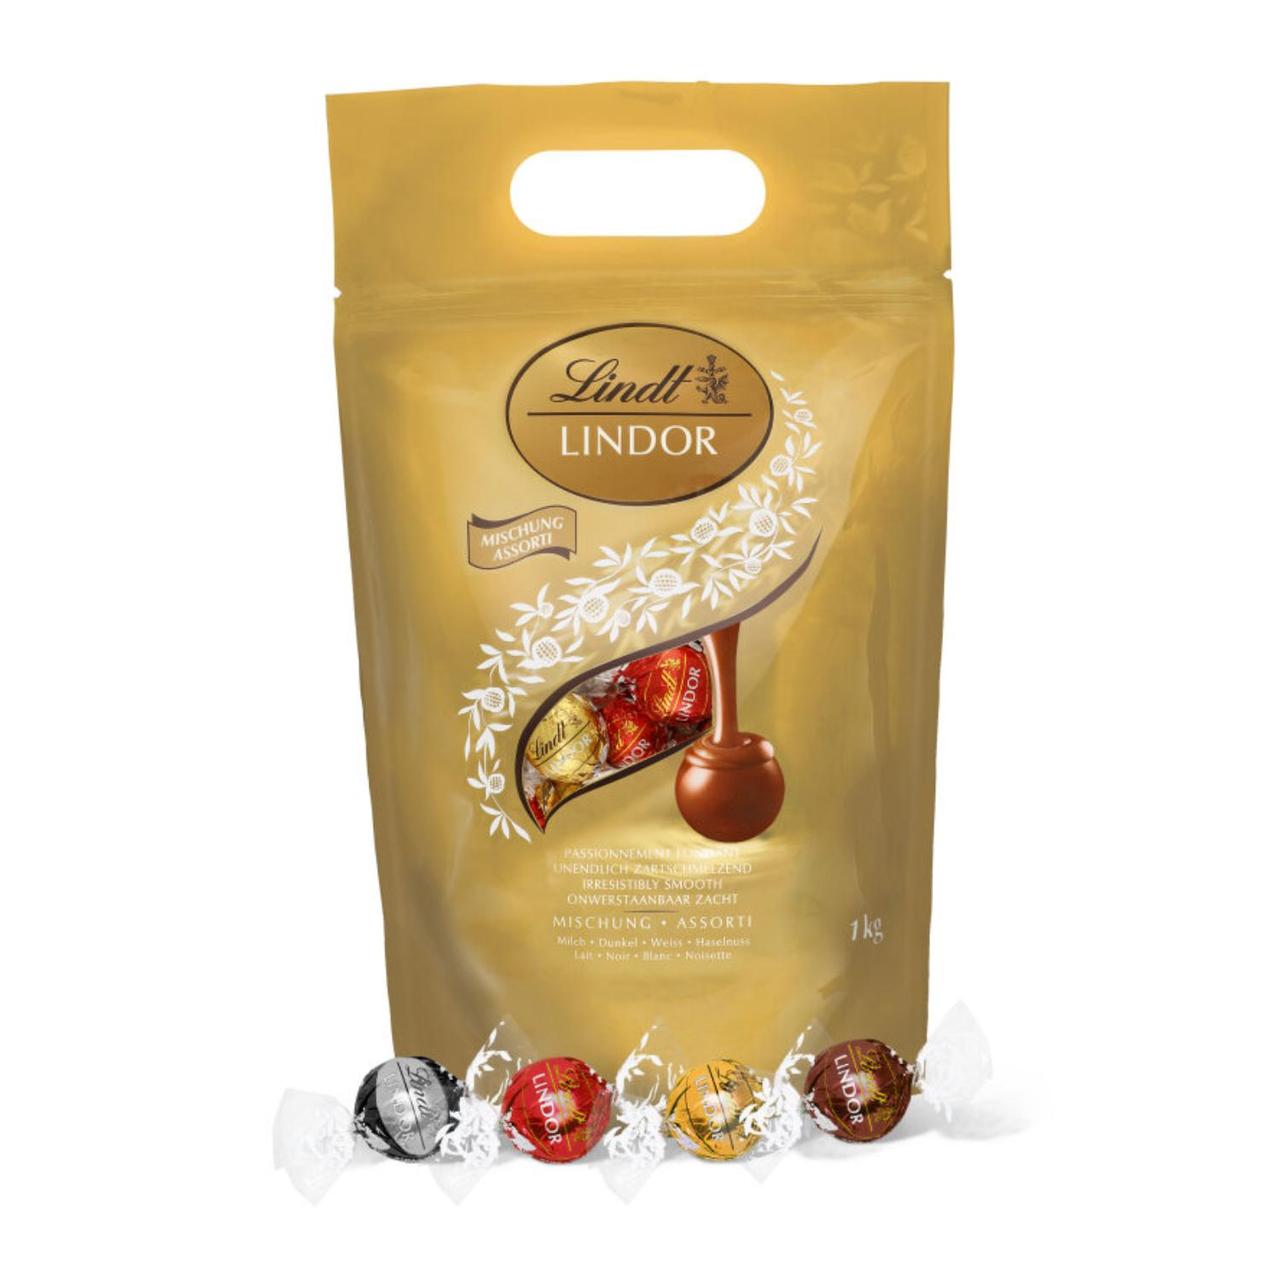 Lindt LINDOR Assorted Chocolate Truffles Gold Bag